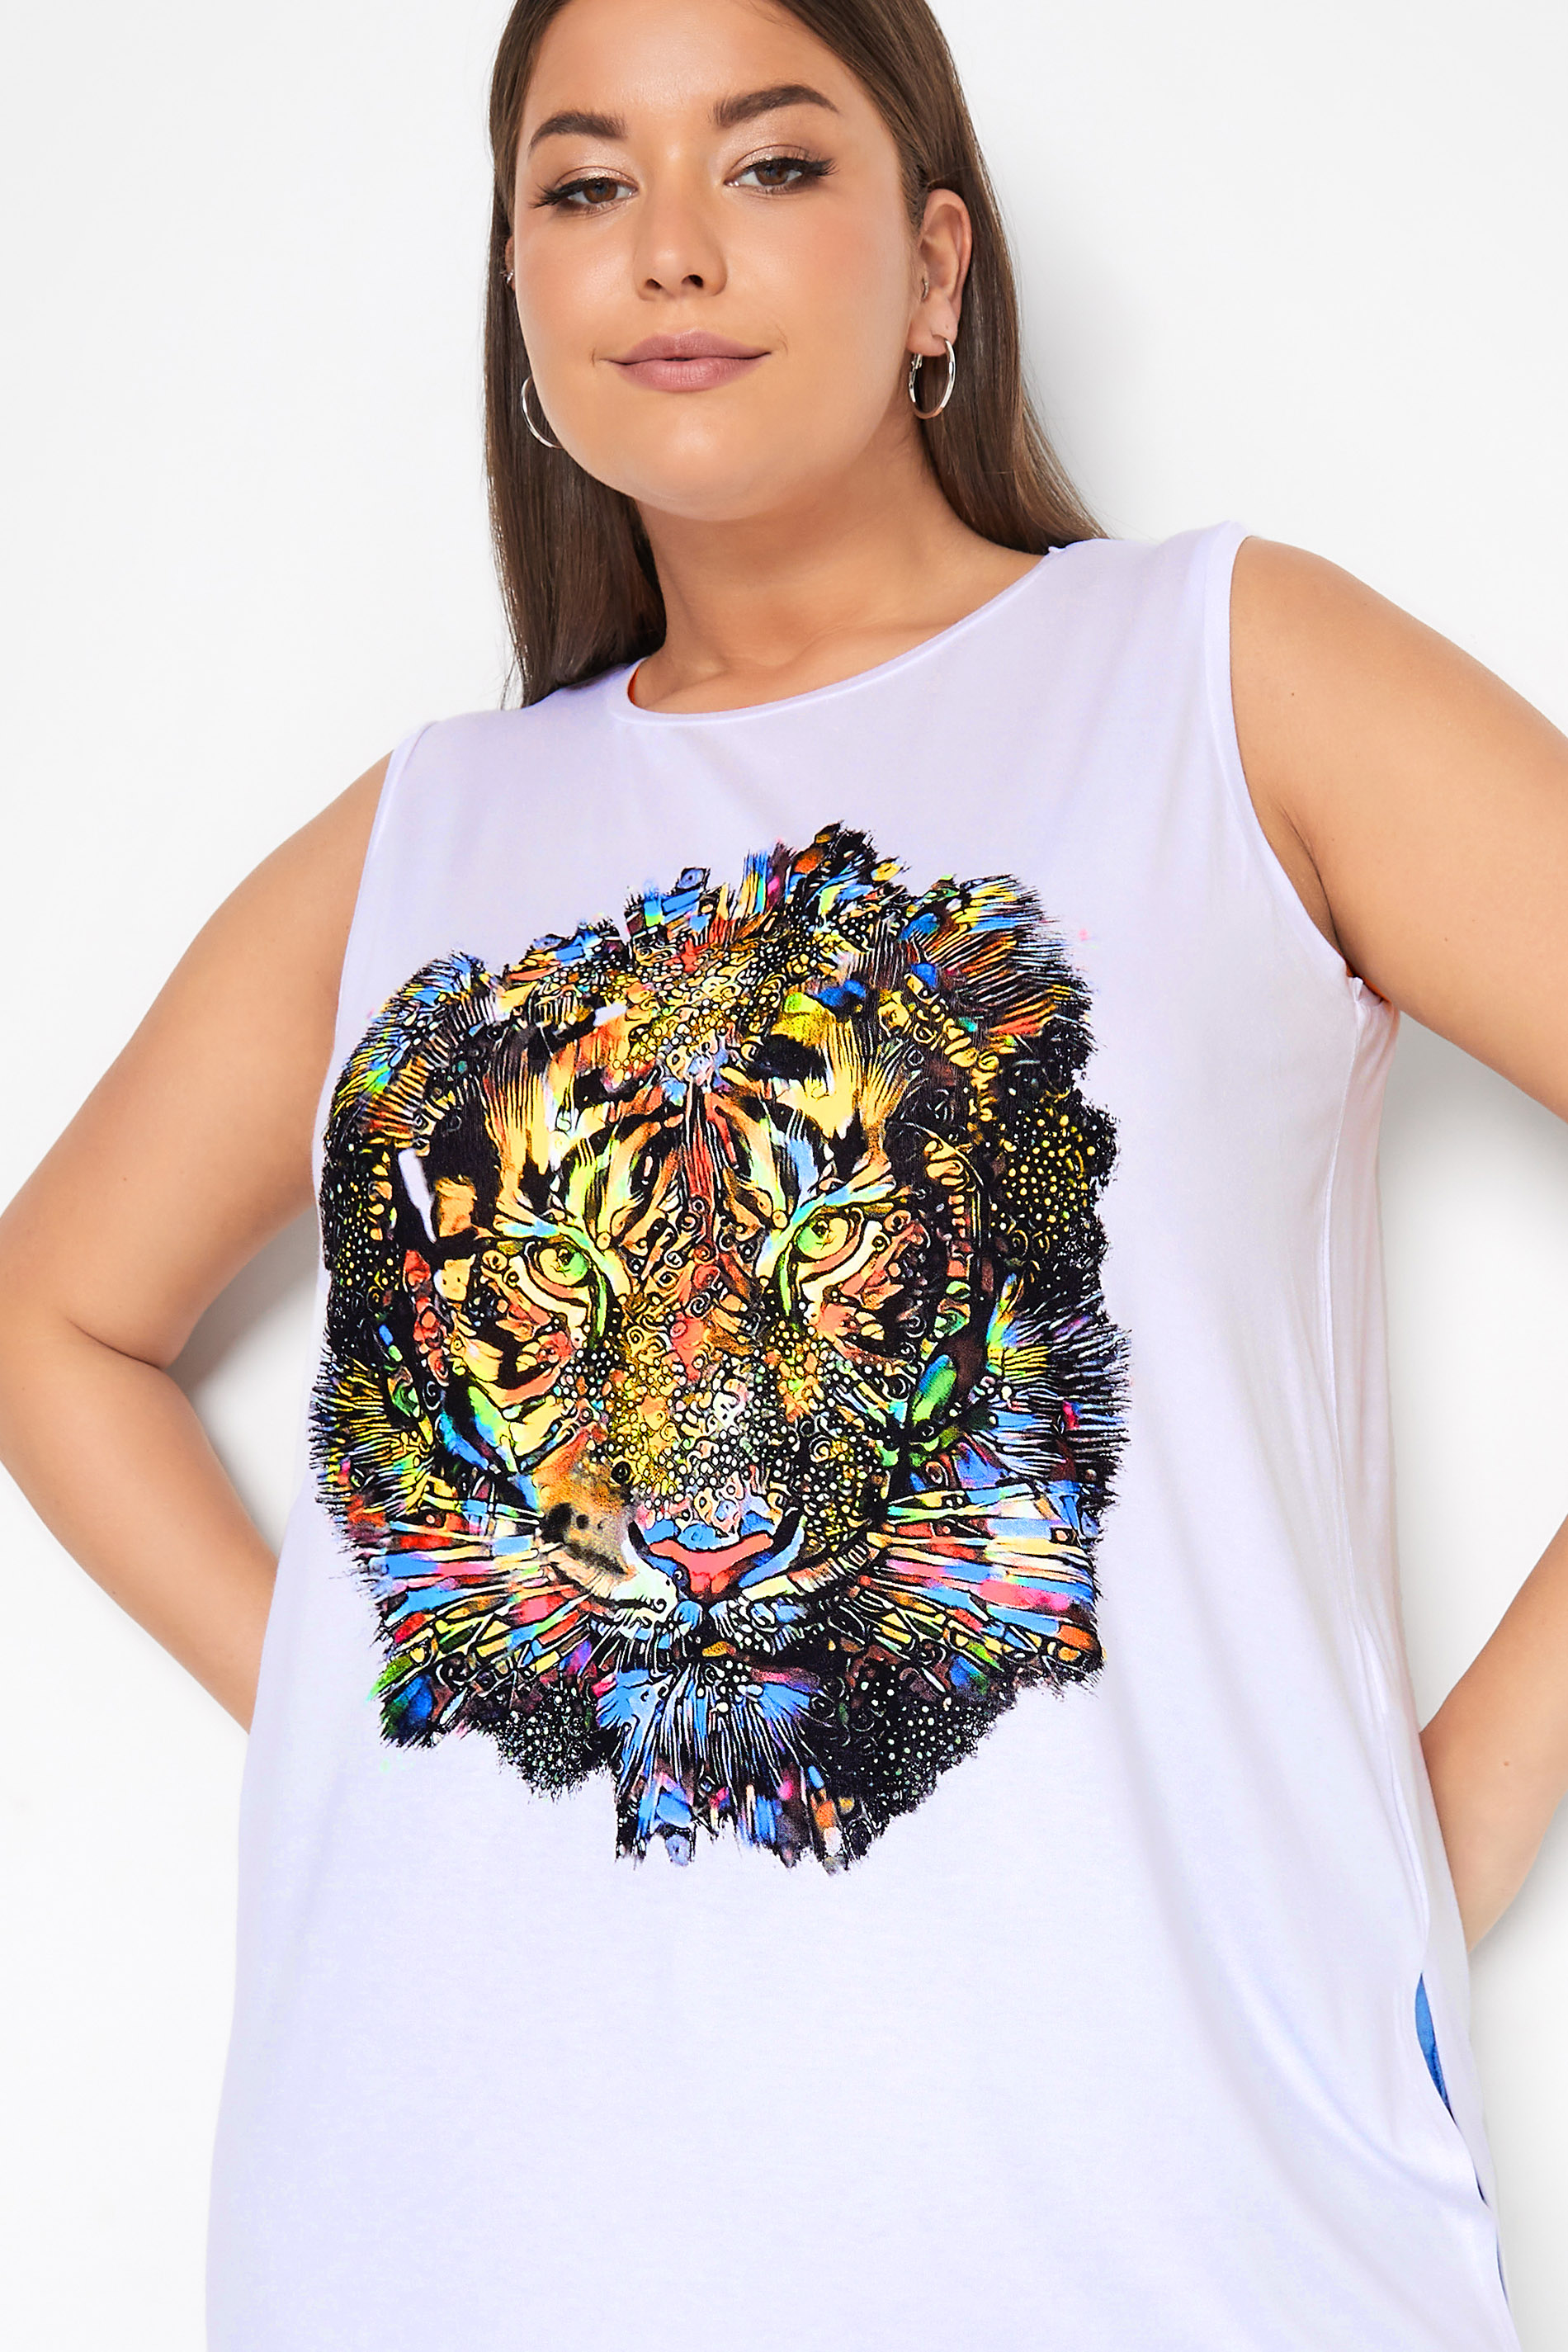 Grande taille  Tops Grande taille  T-Shirts | Débardeur Blanc Graphique Tigre en Jersey - GG13708